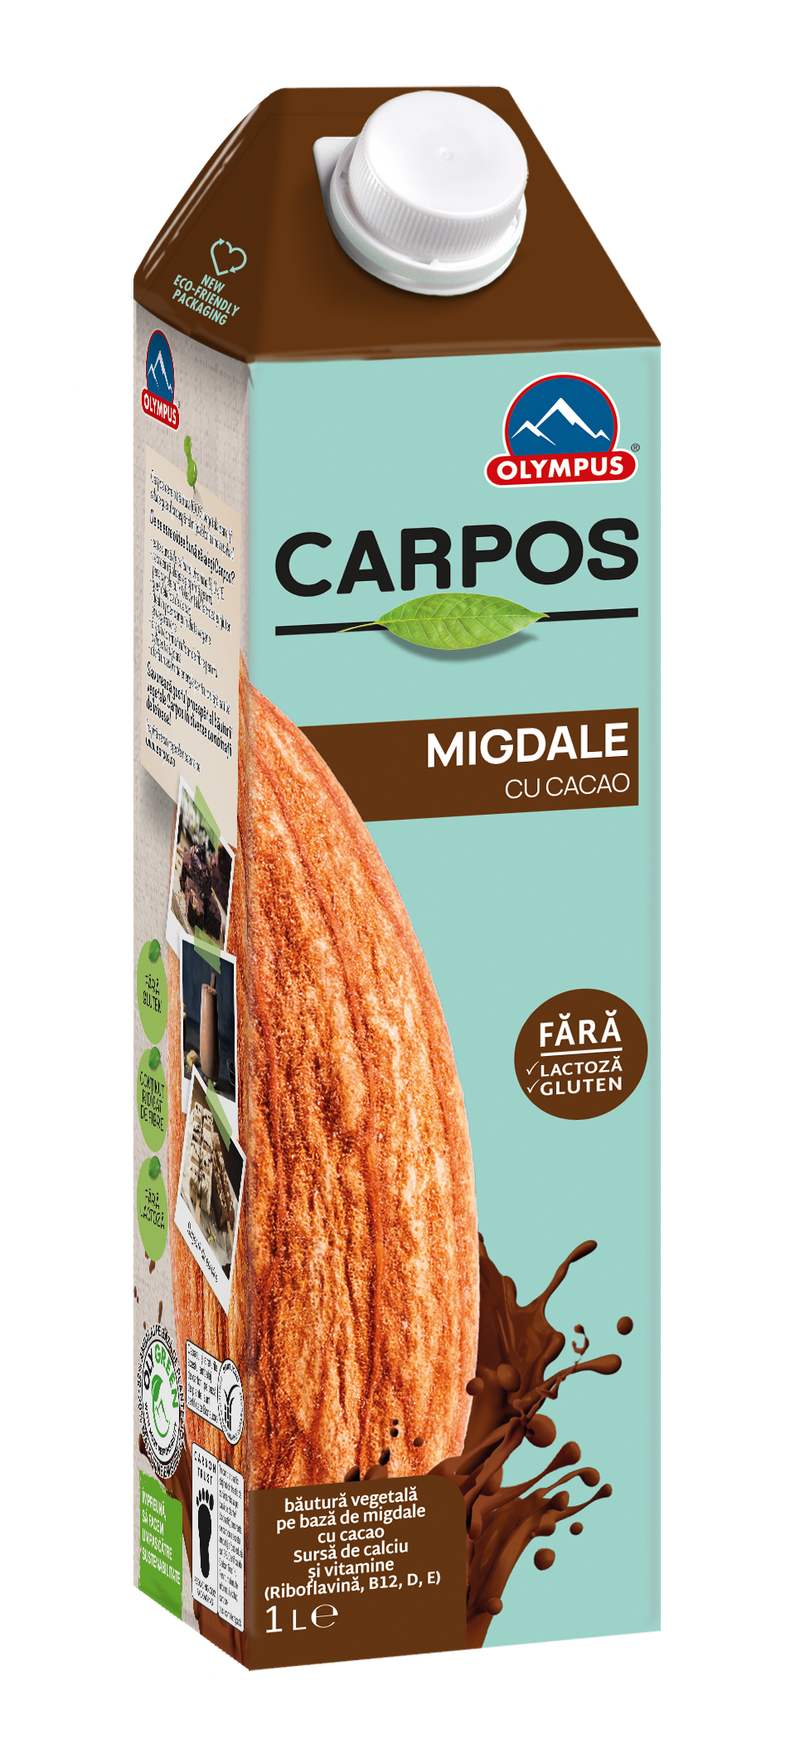 Bautura vegetala Carpos cu migdale si cacao, Olympus 1L